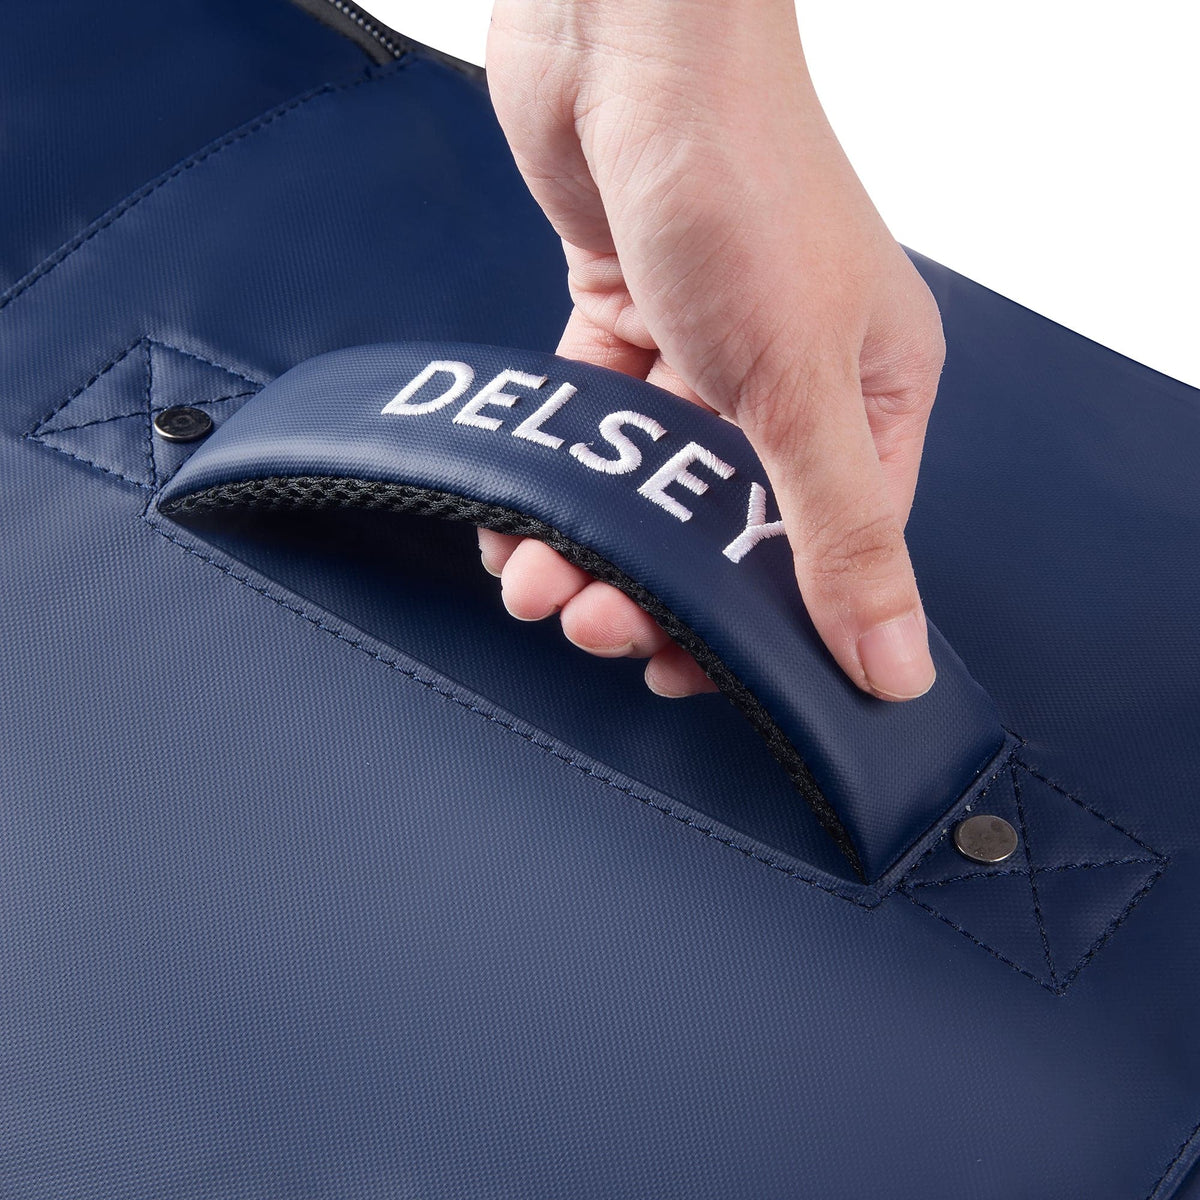 Delsey Raspail Duffel Bag - 28" Rolling